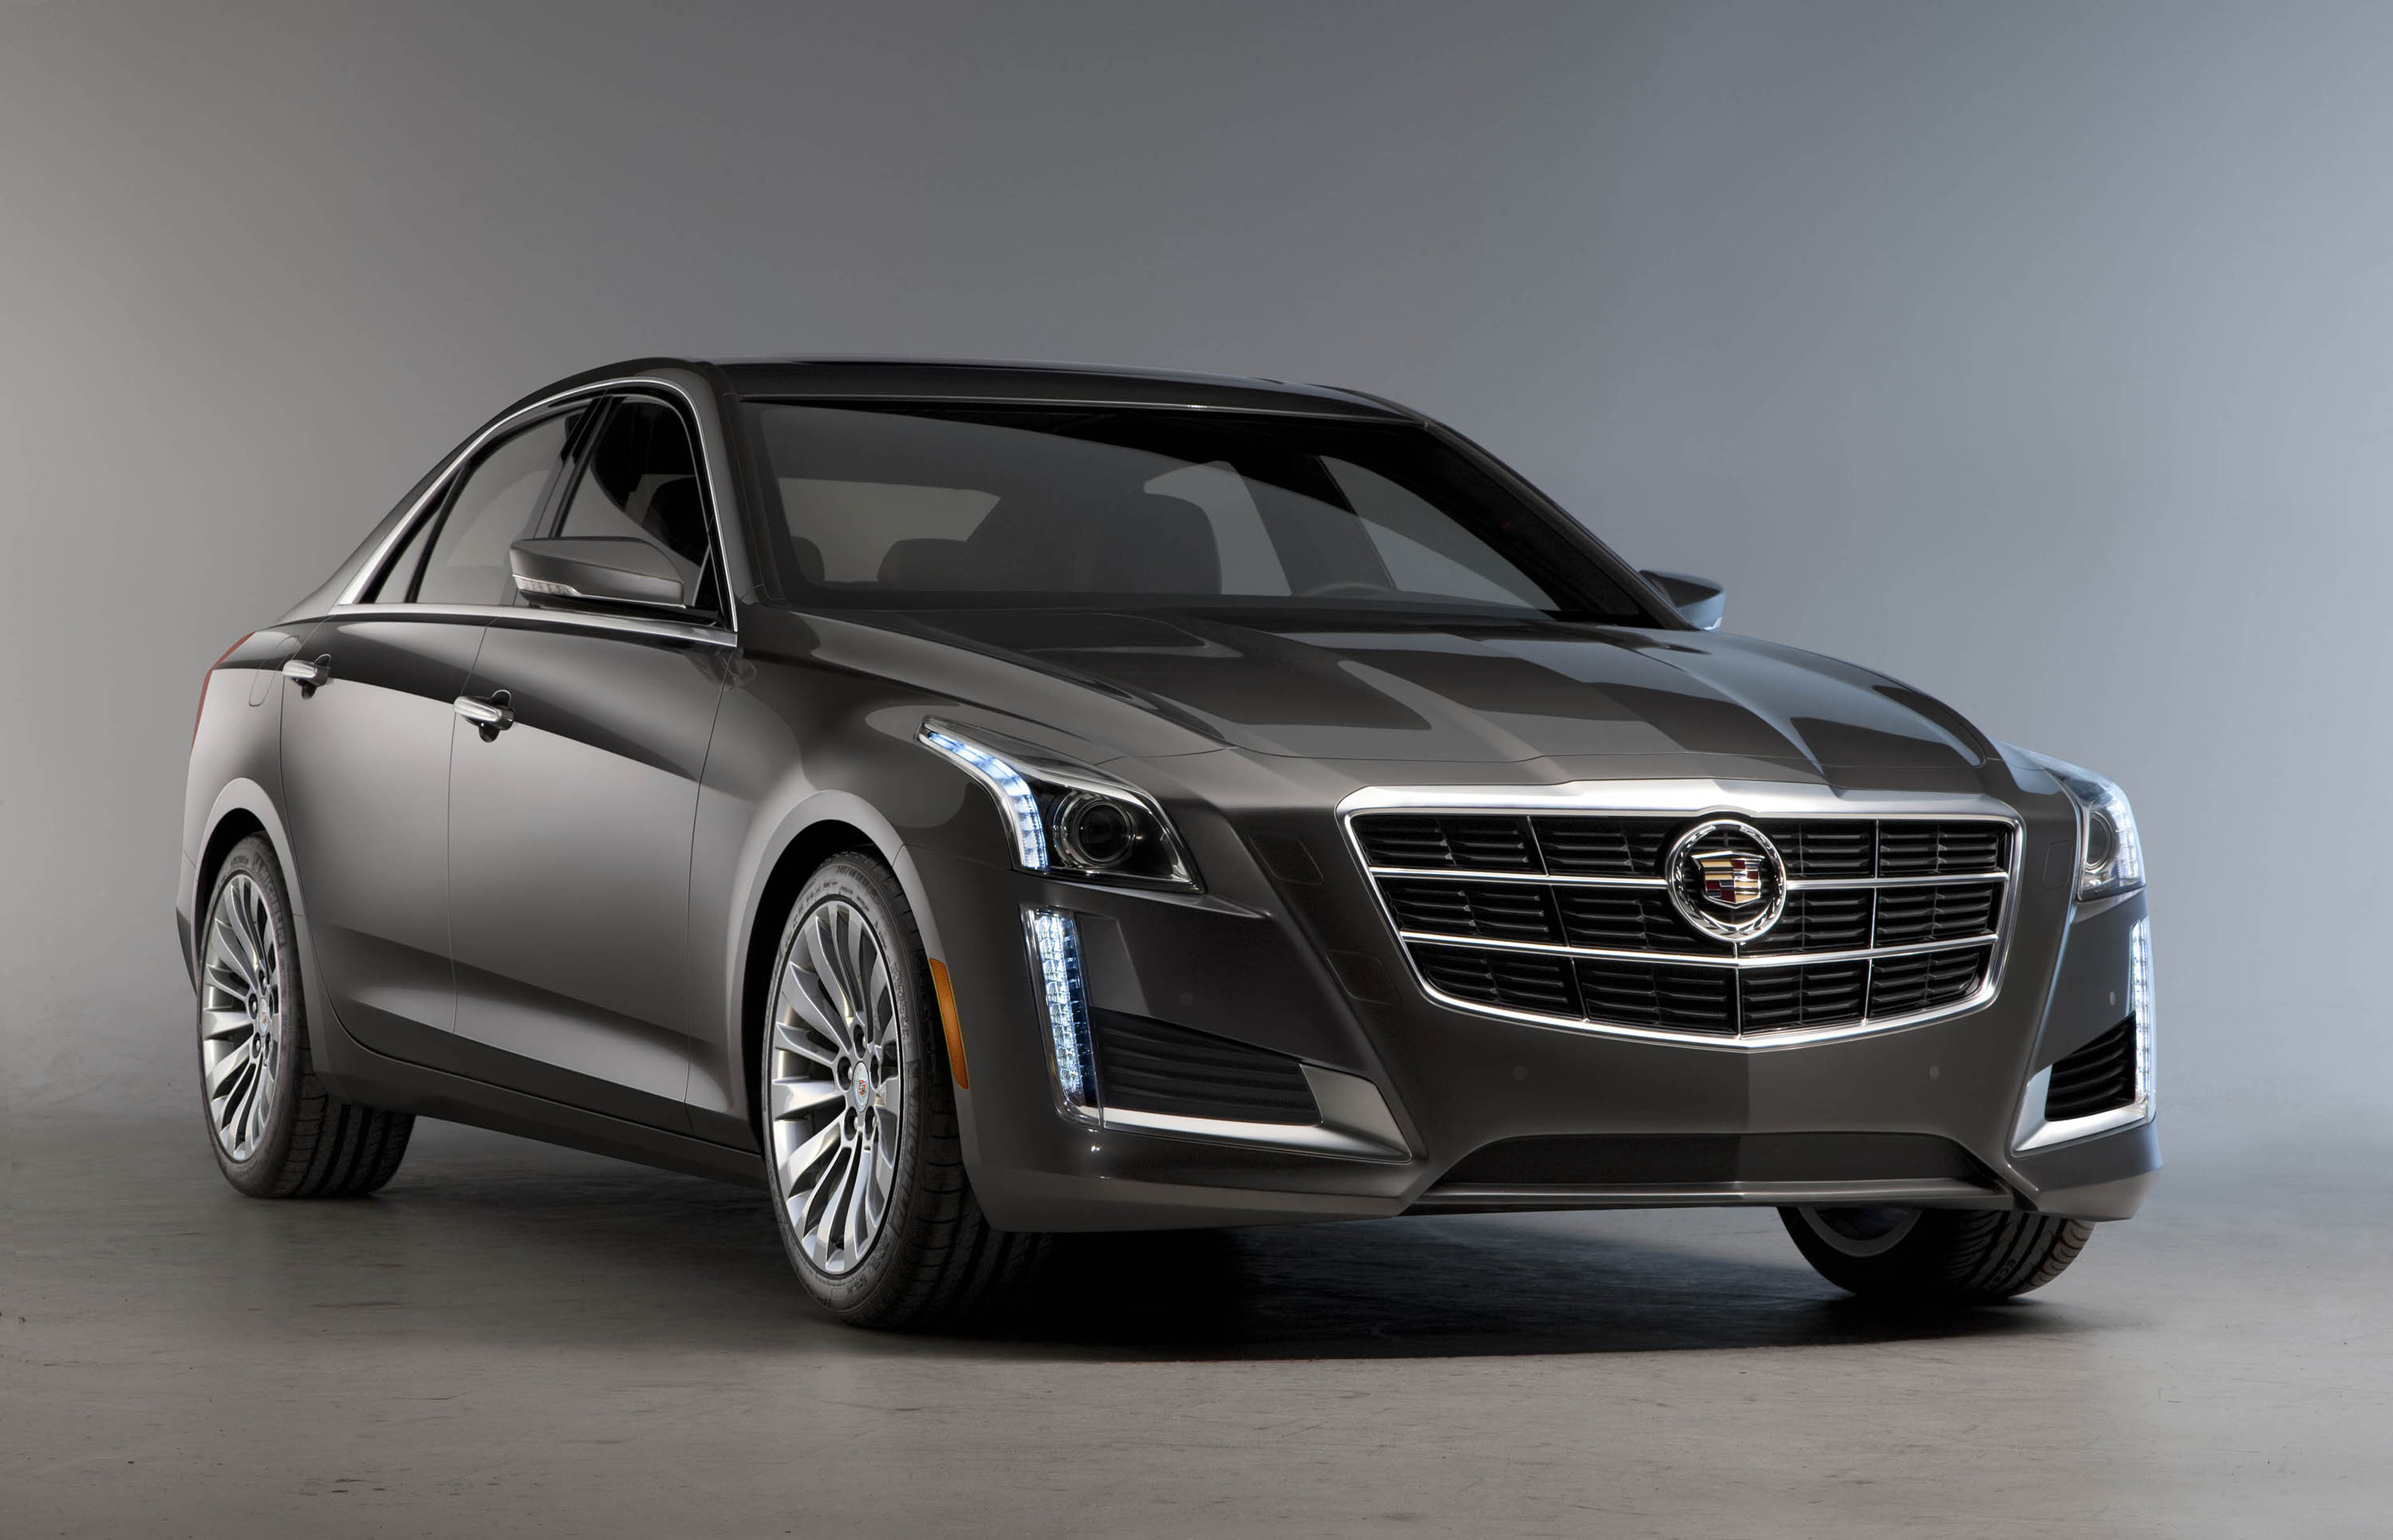 2014 Cadillac CTS Sedan | GM Authority